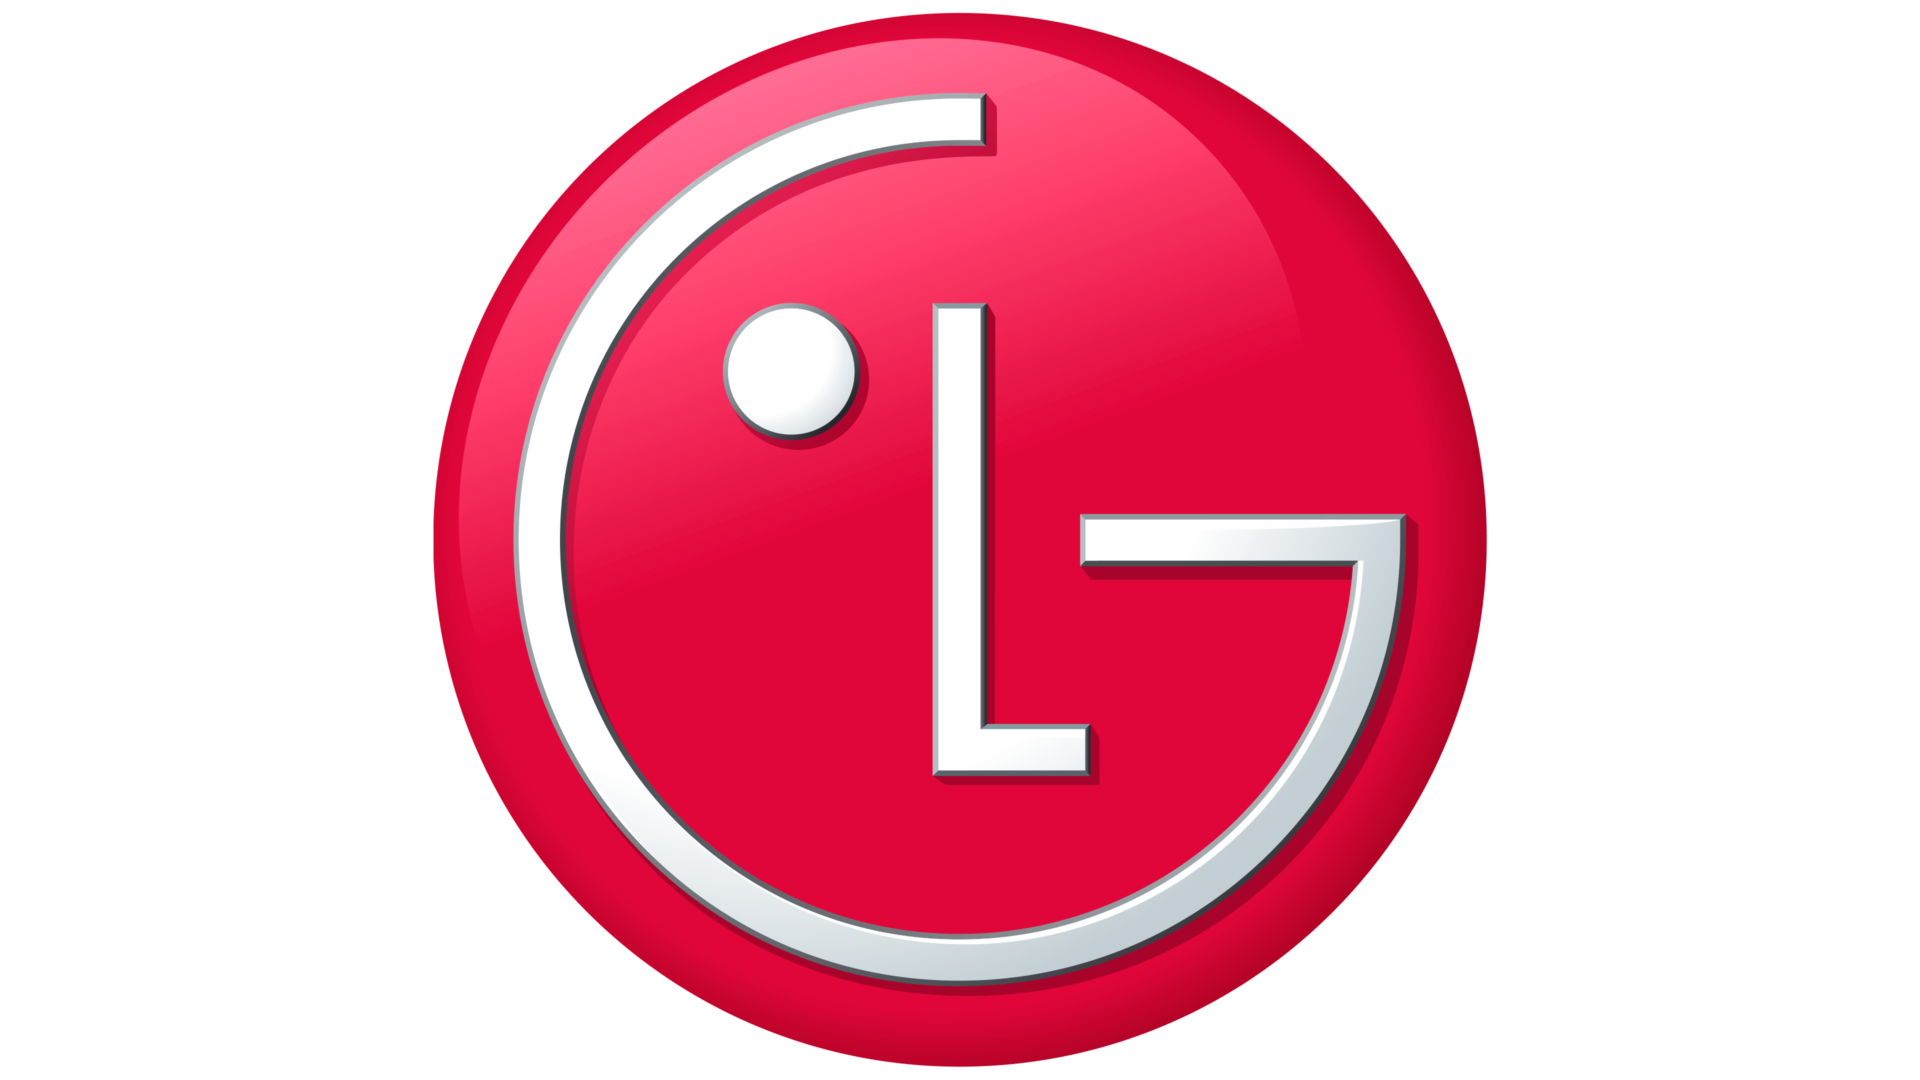 Lg телевизоры логотип. LG Electronics. Логотип лж. LG Электроникс логотип. LG новый логотип.